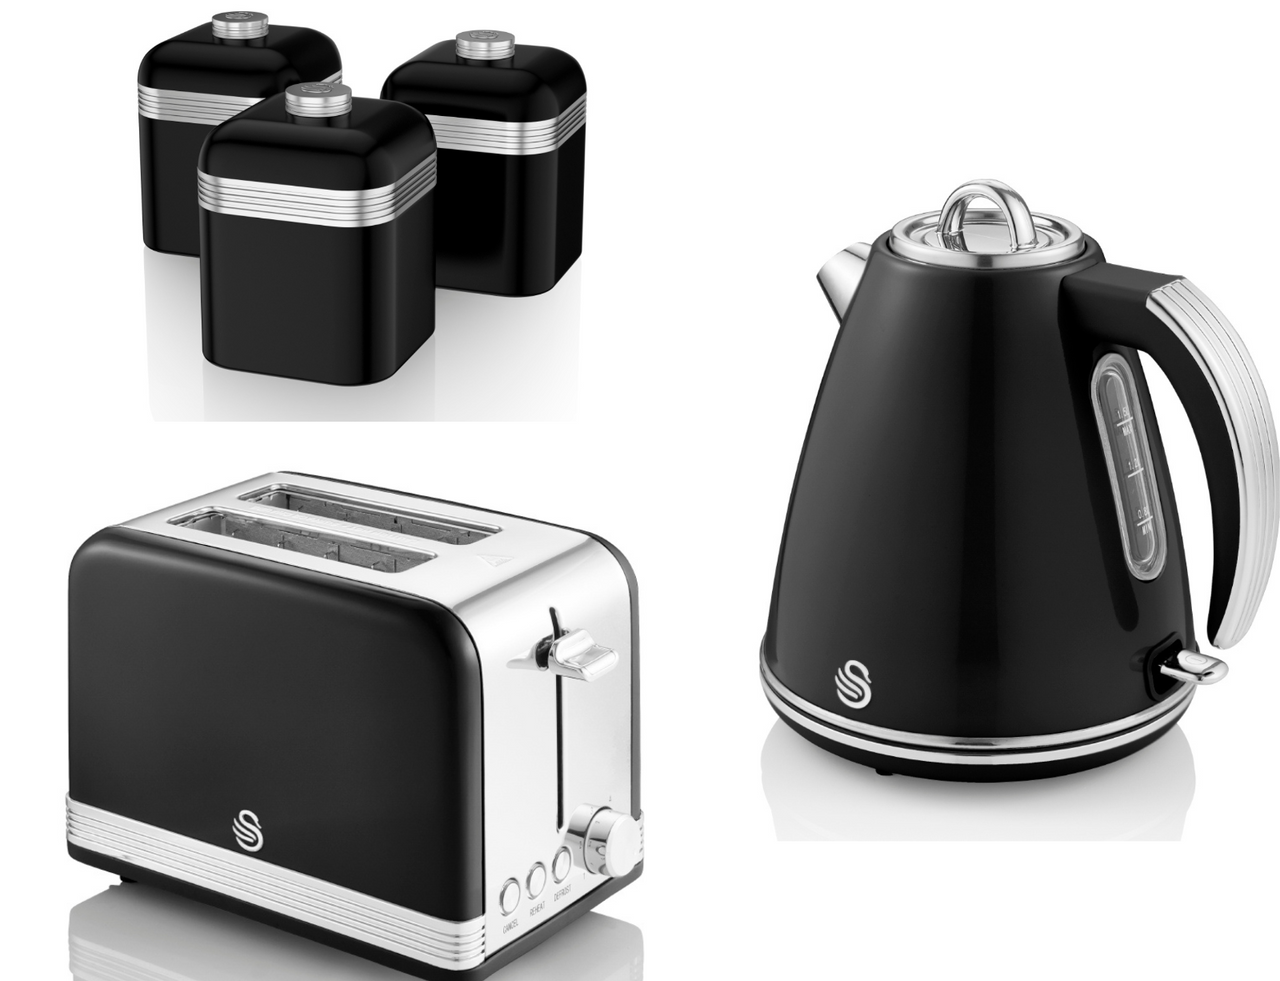 SWAN Retro Black Jug Kettle 2 Slice Toaster & Set of 3 Canisters Matching Set